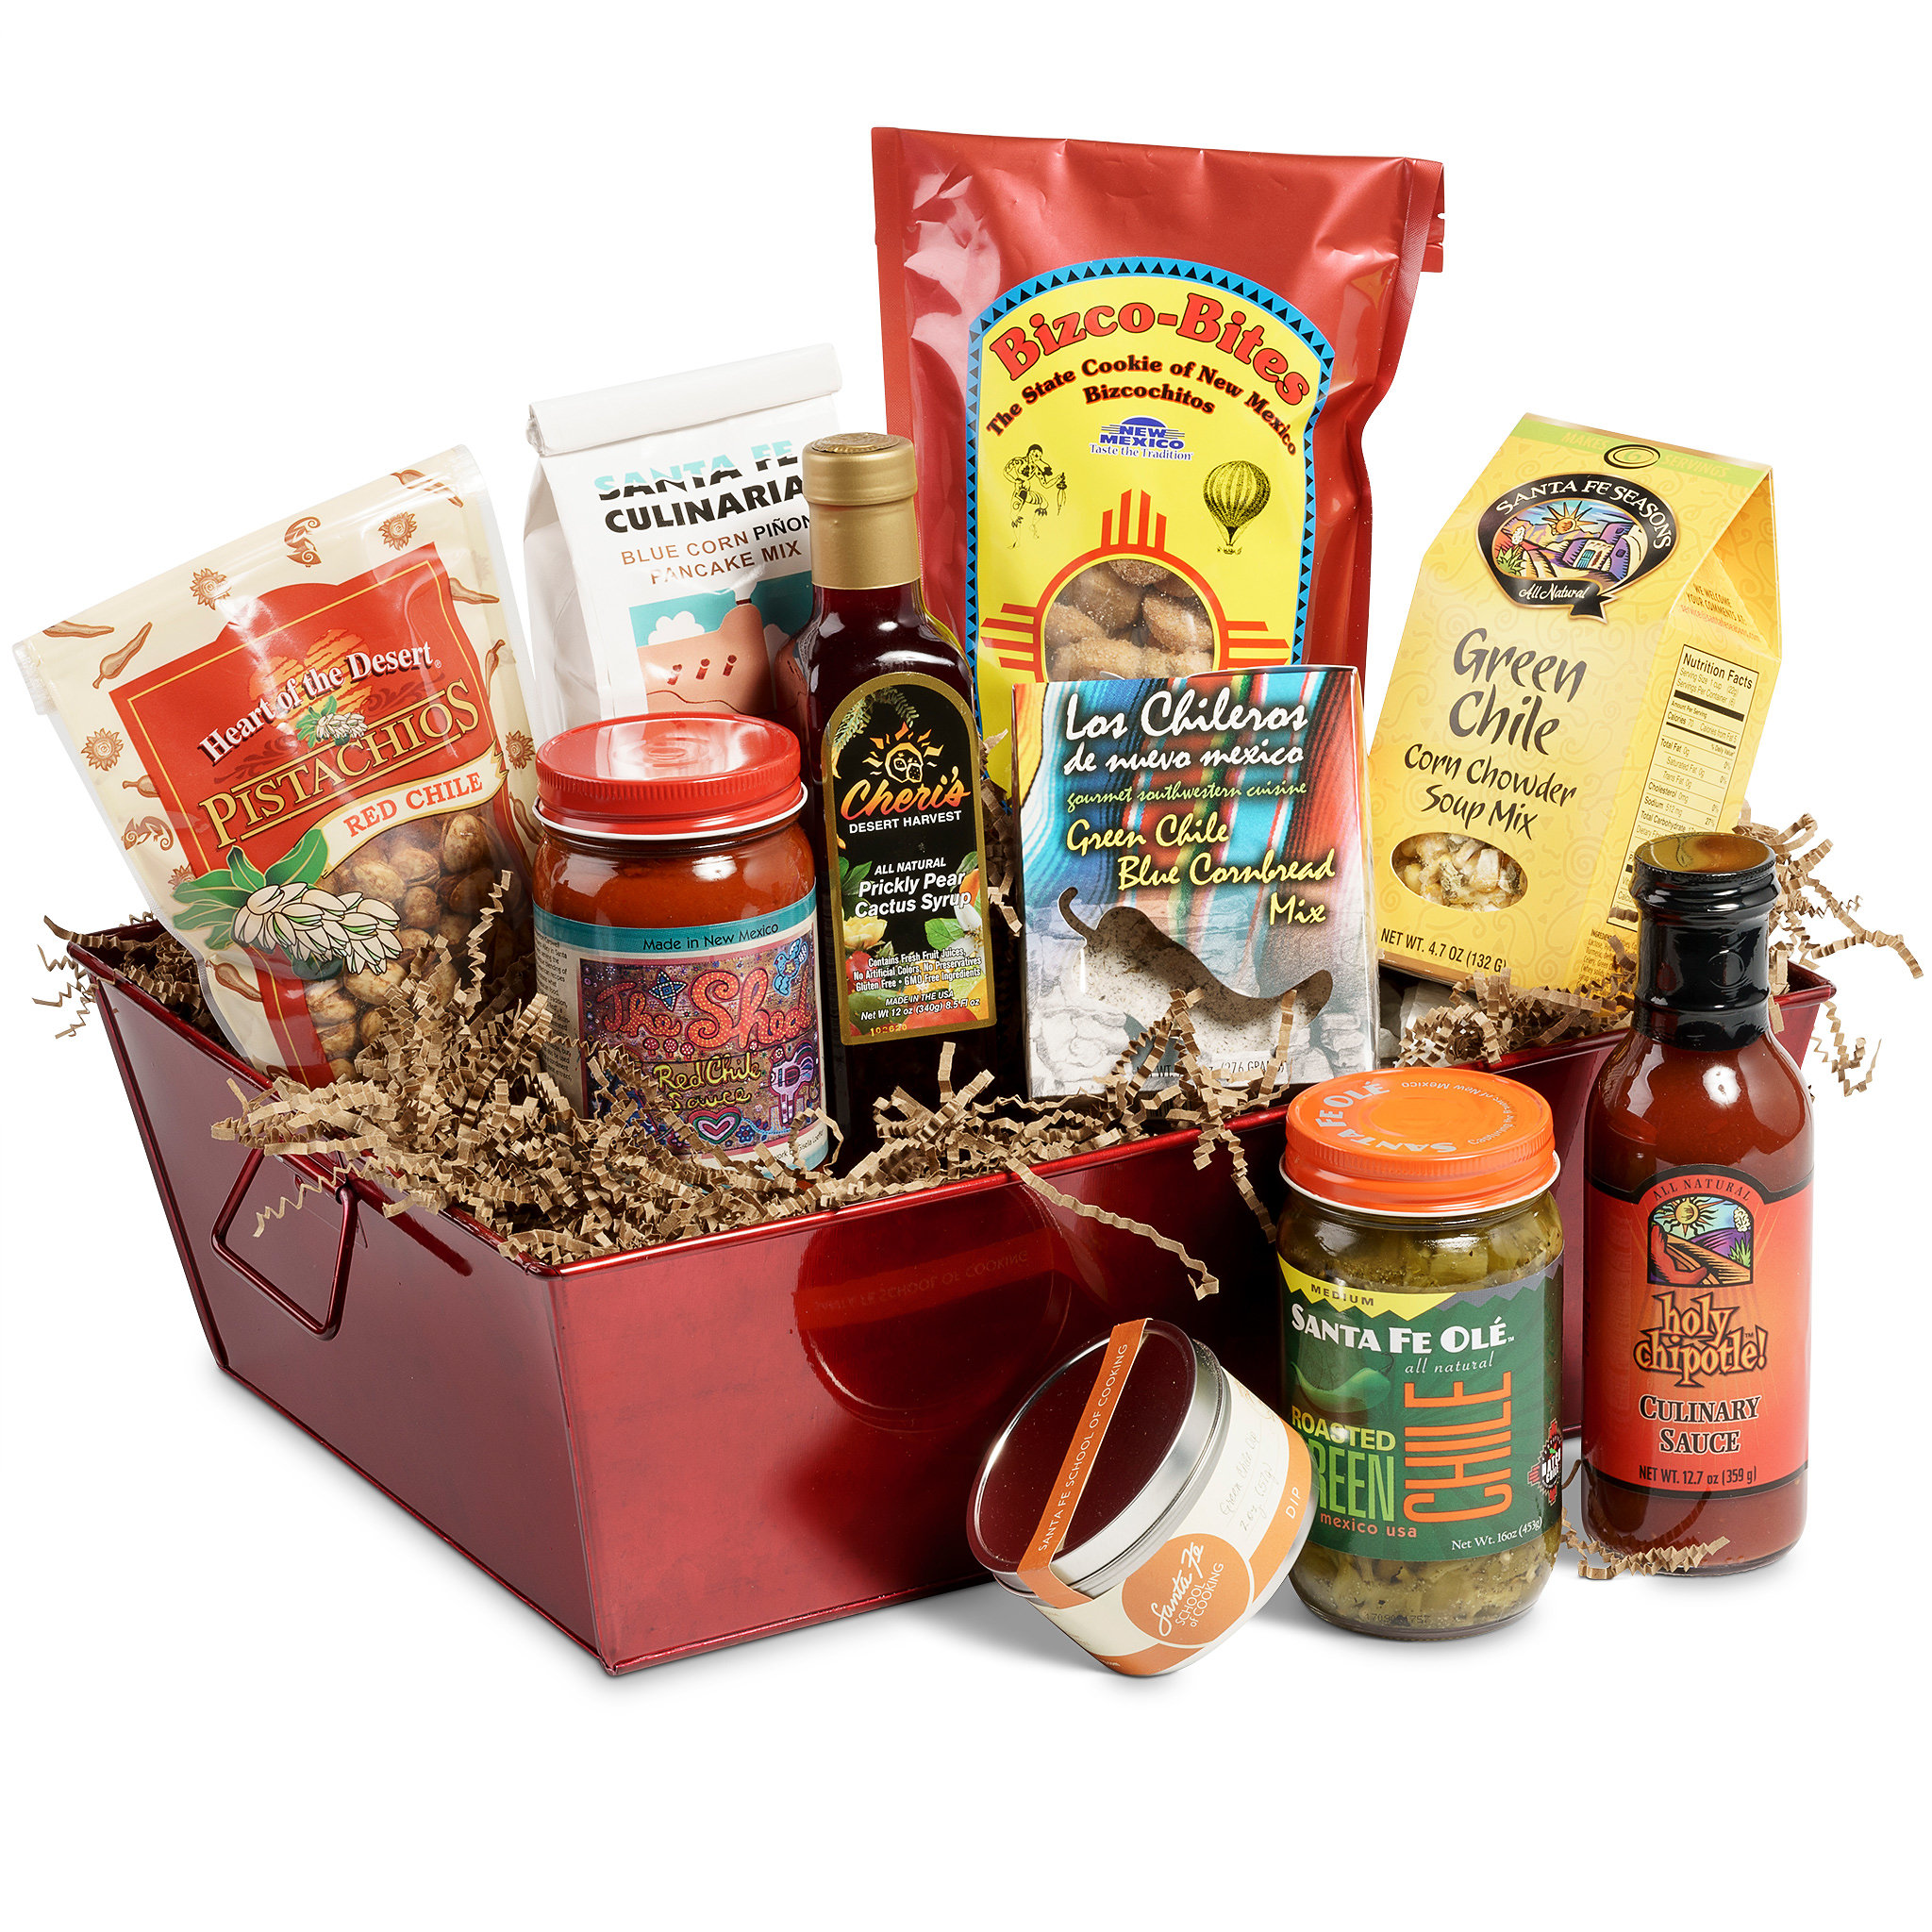 gift baskets and favorite snack packs - Santa Fe School of Cooking